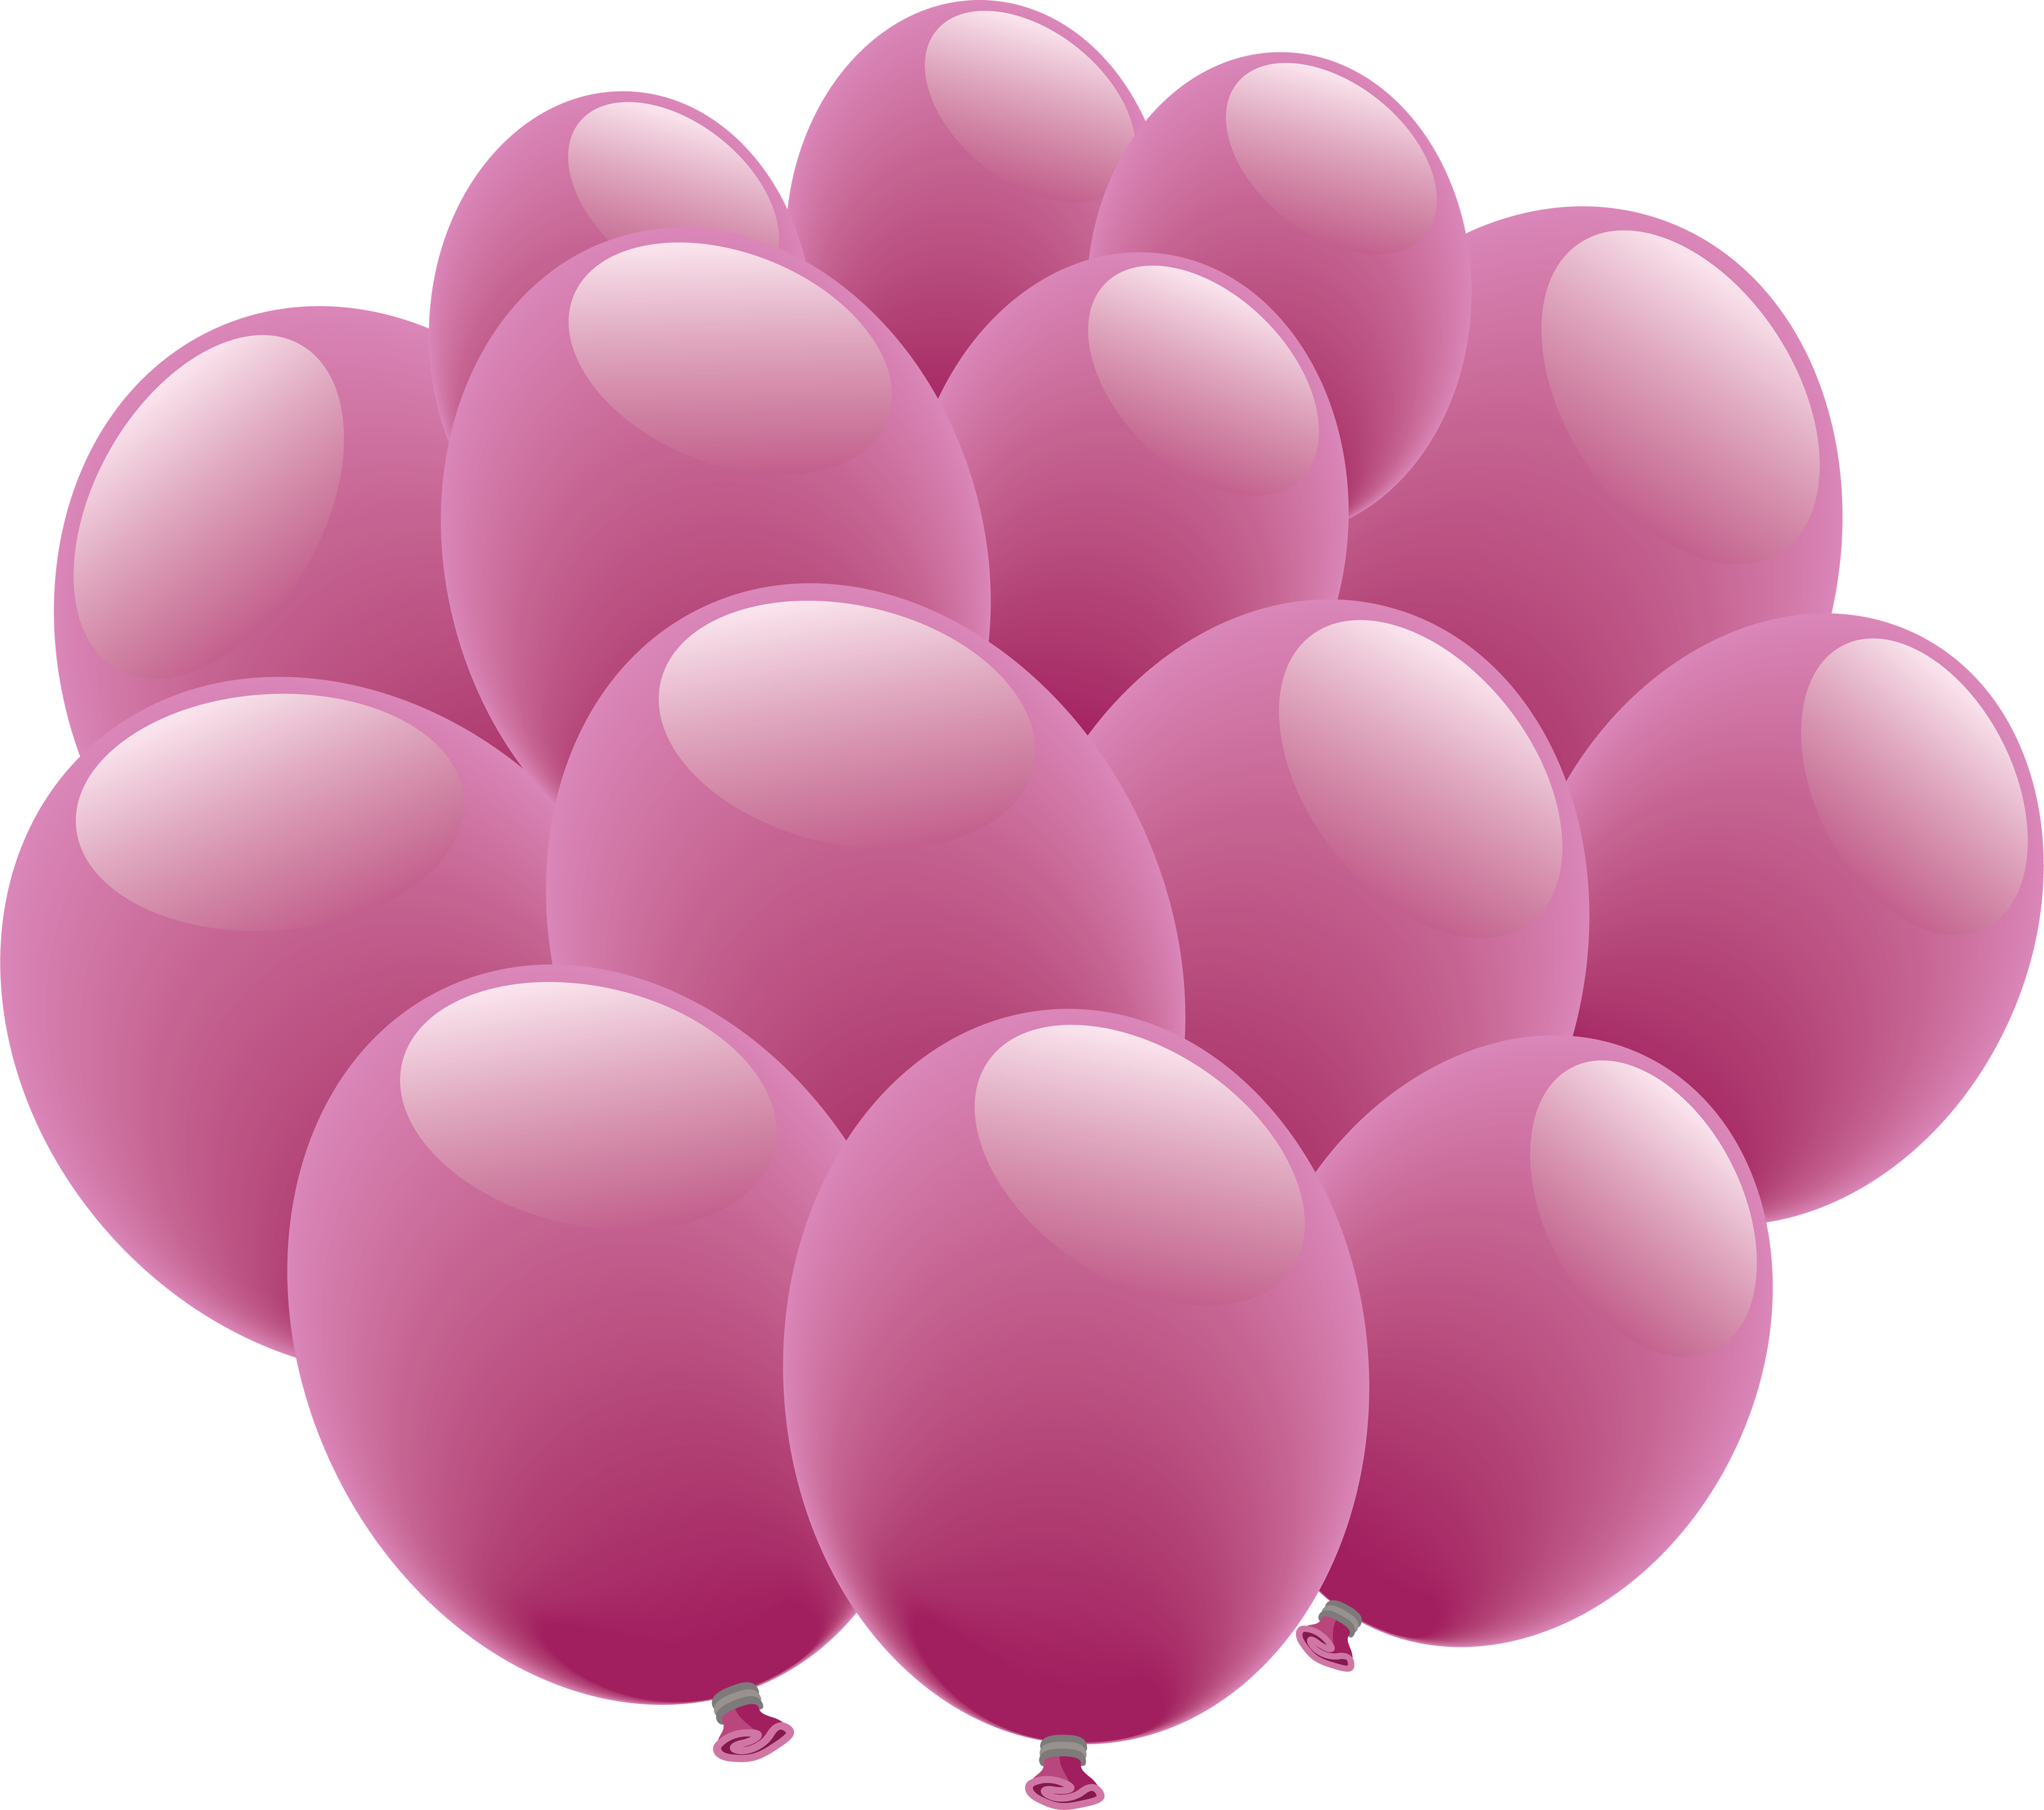 Balloons thirty four isolated. Peach clipart balloon